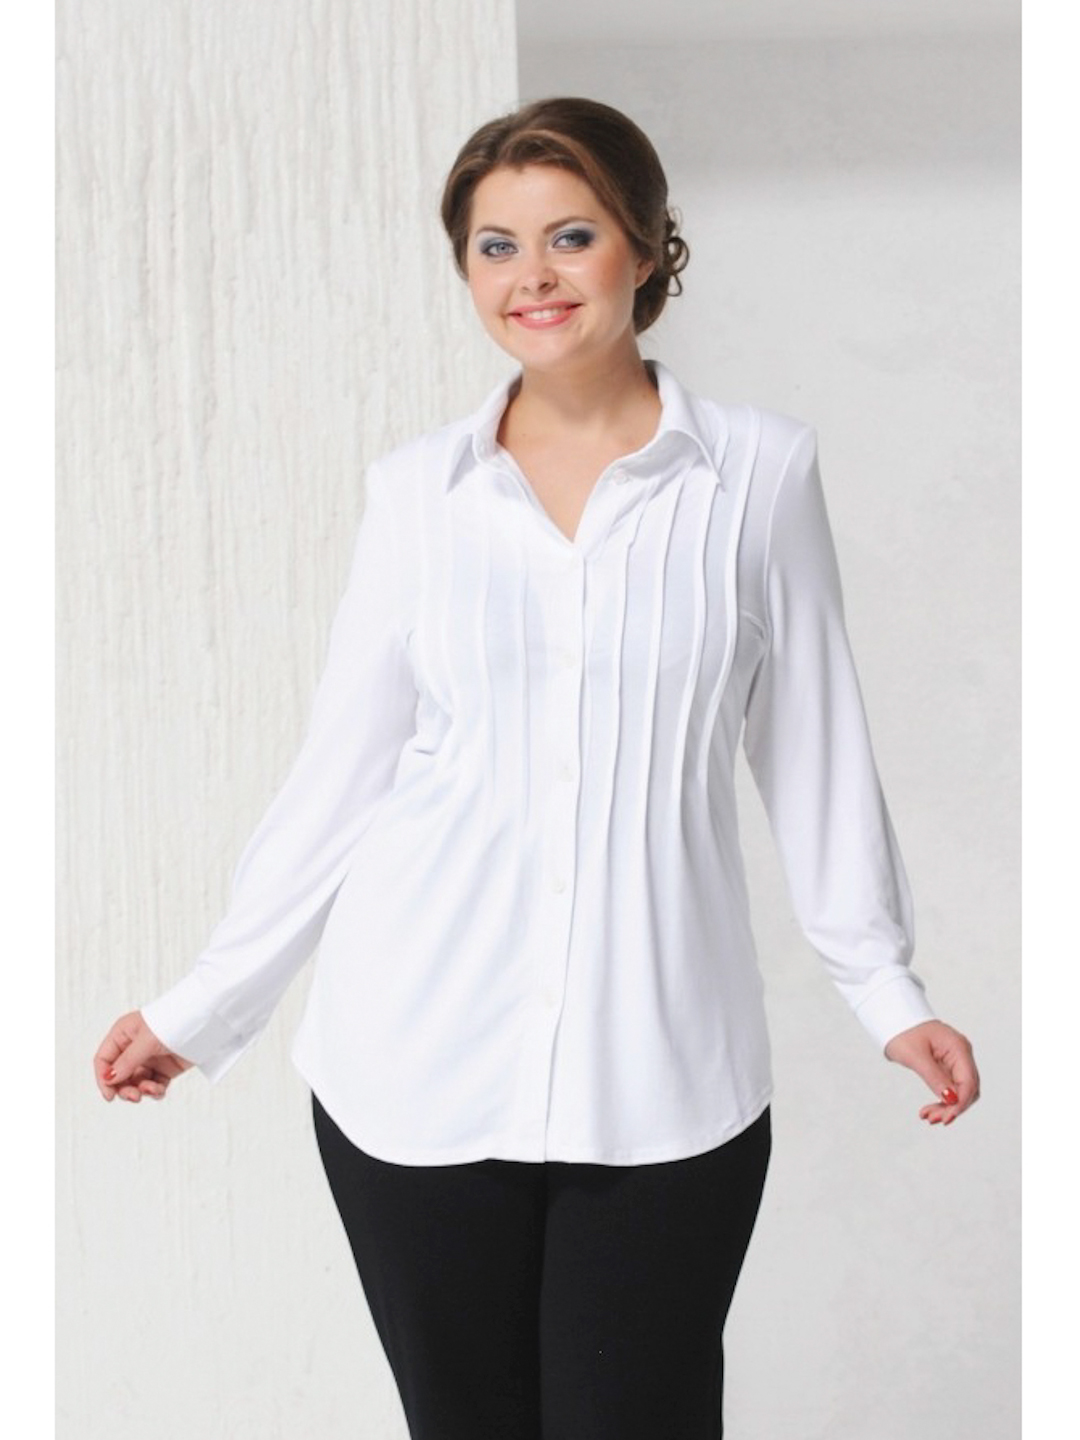 Блузки женские 50 размера. Блузки для полных женщин. Блузки женские для полных. Белая блузка.